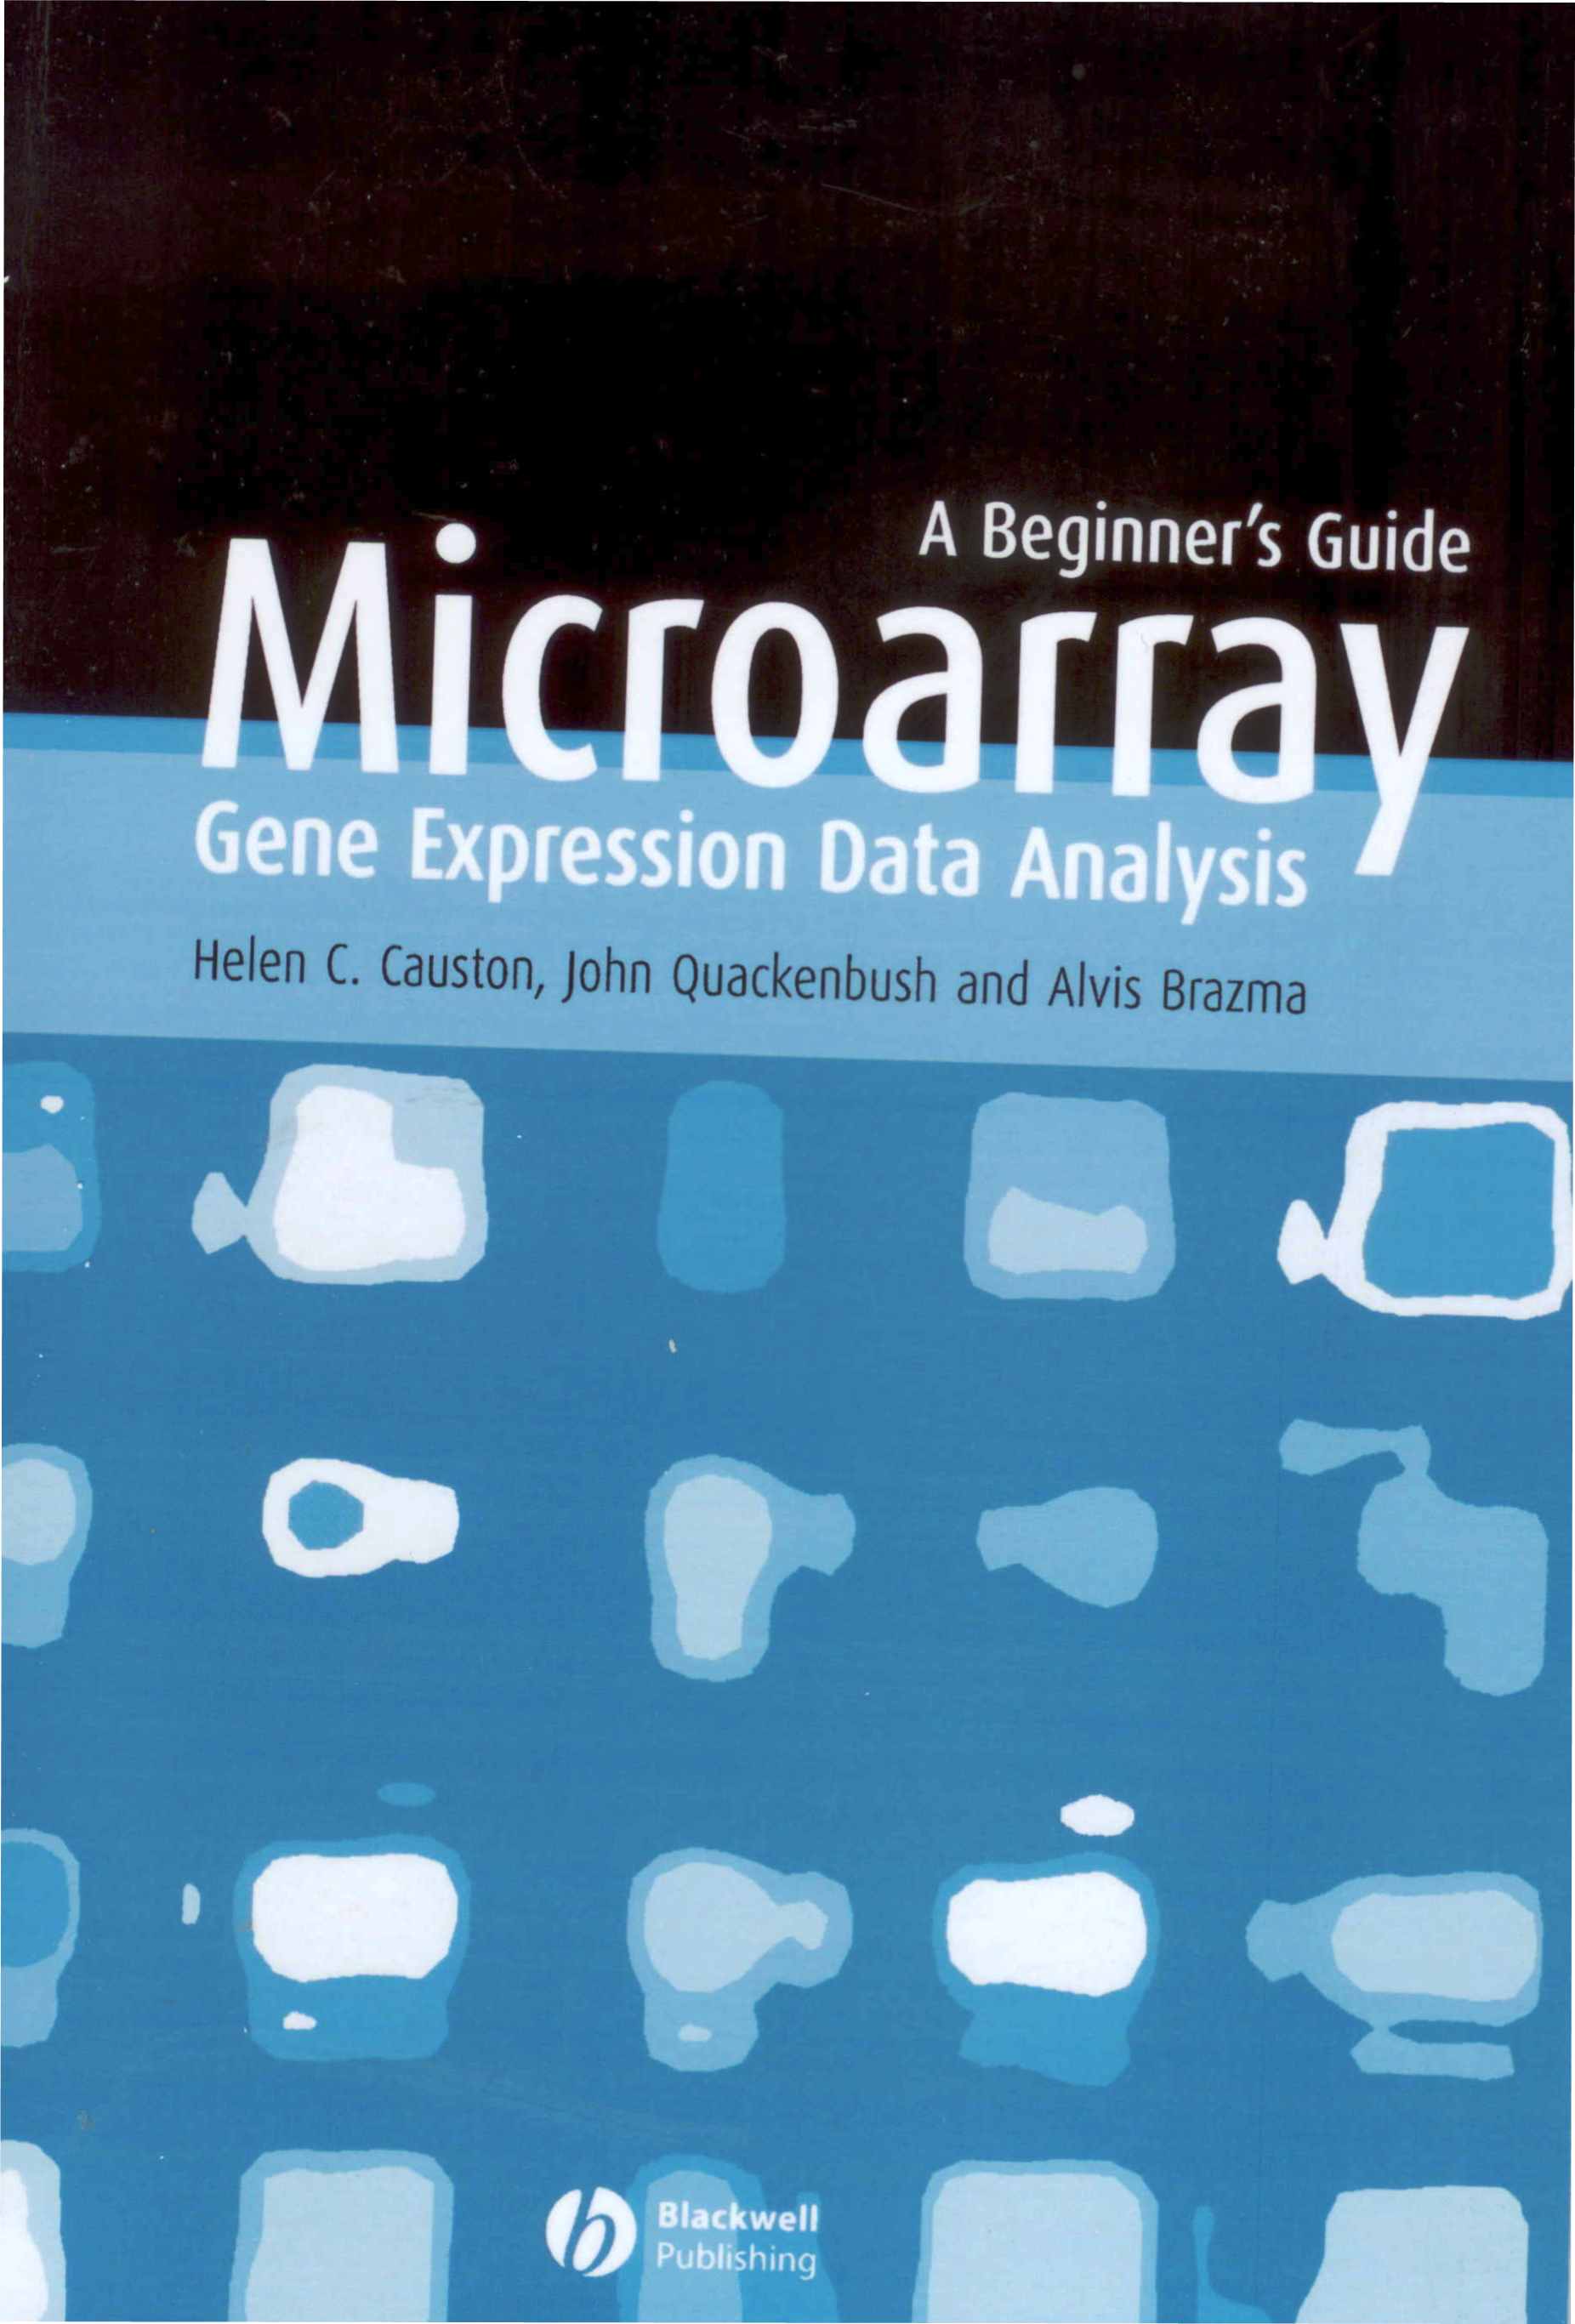 http://www.cenicana.org/investigacion/seica/imagenes_libros/2010/microarray.jpg